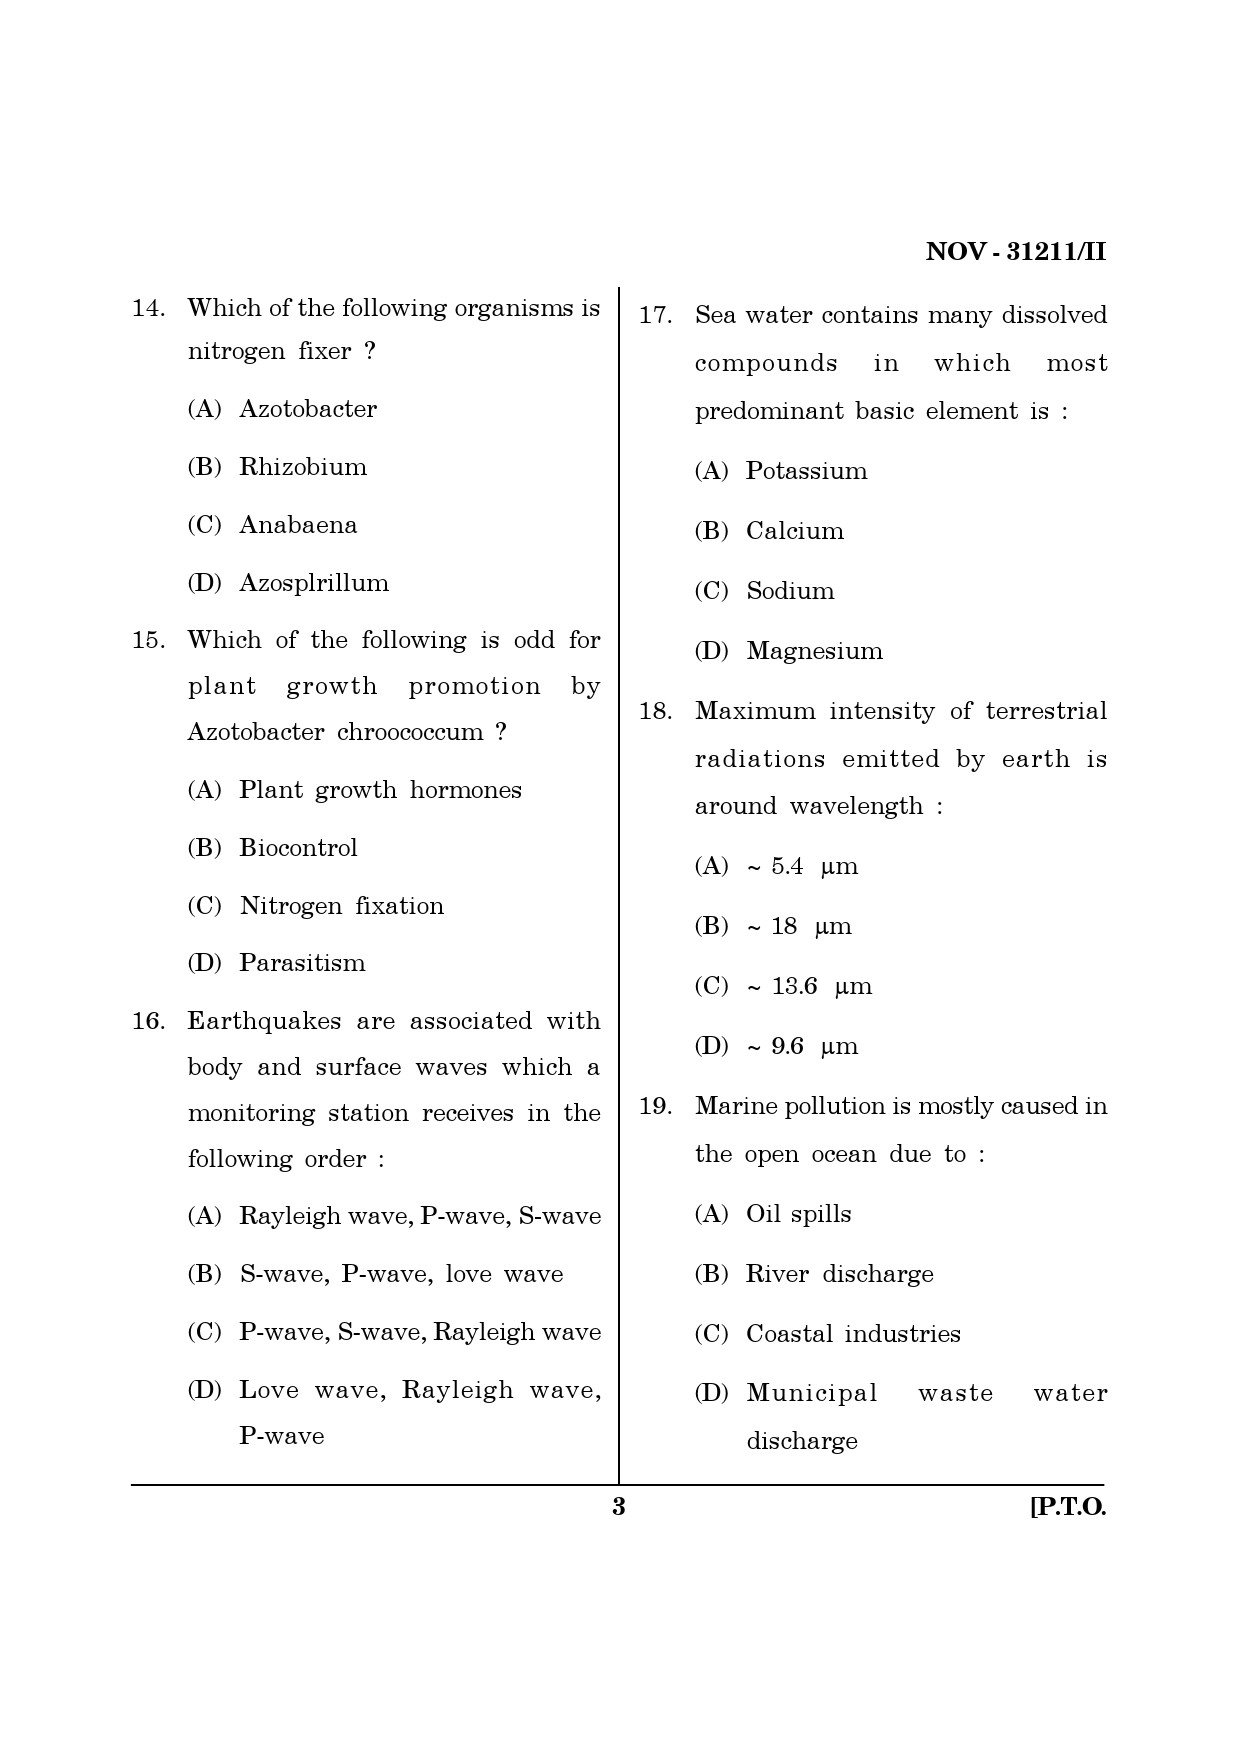 Maharashtra SET Environmental Sciences Question Paper II November 2011 3